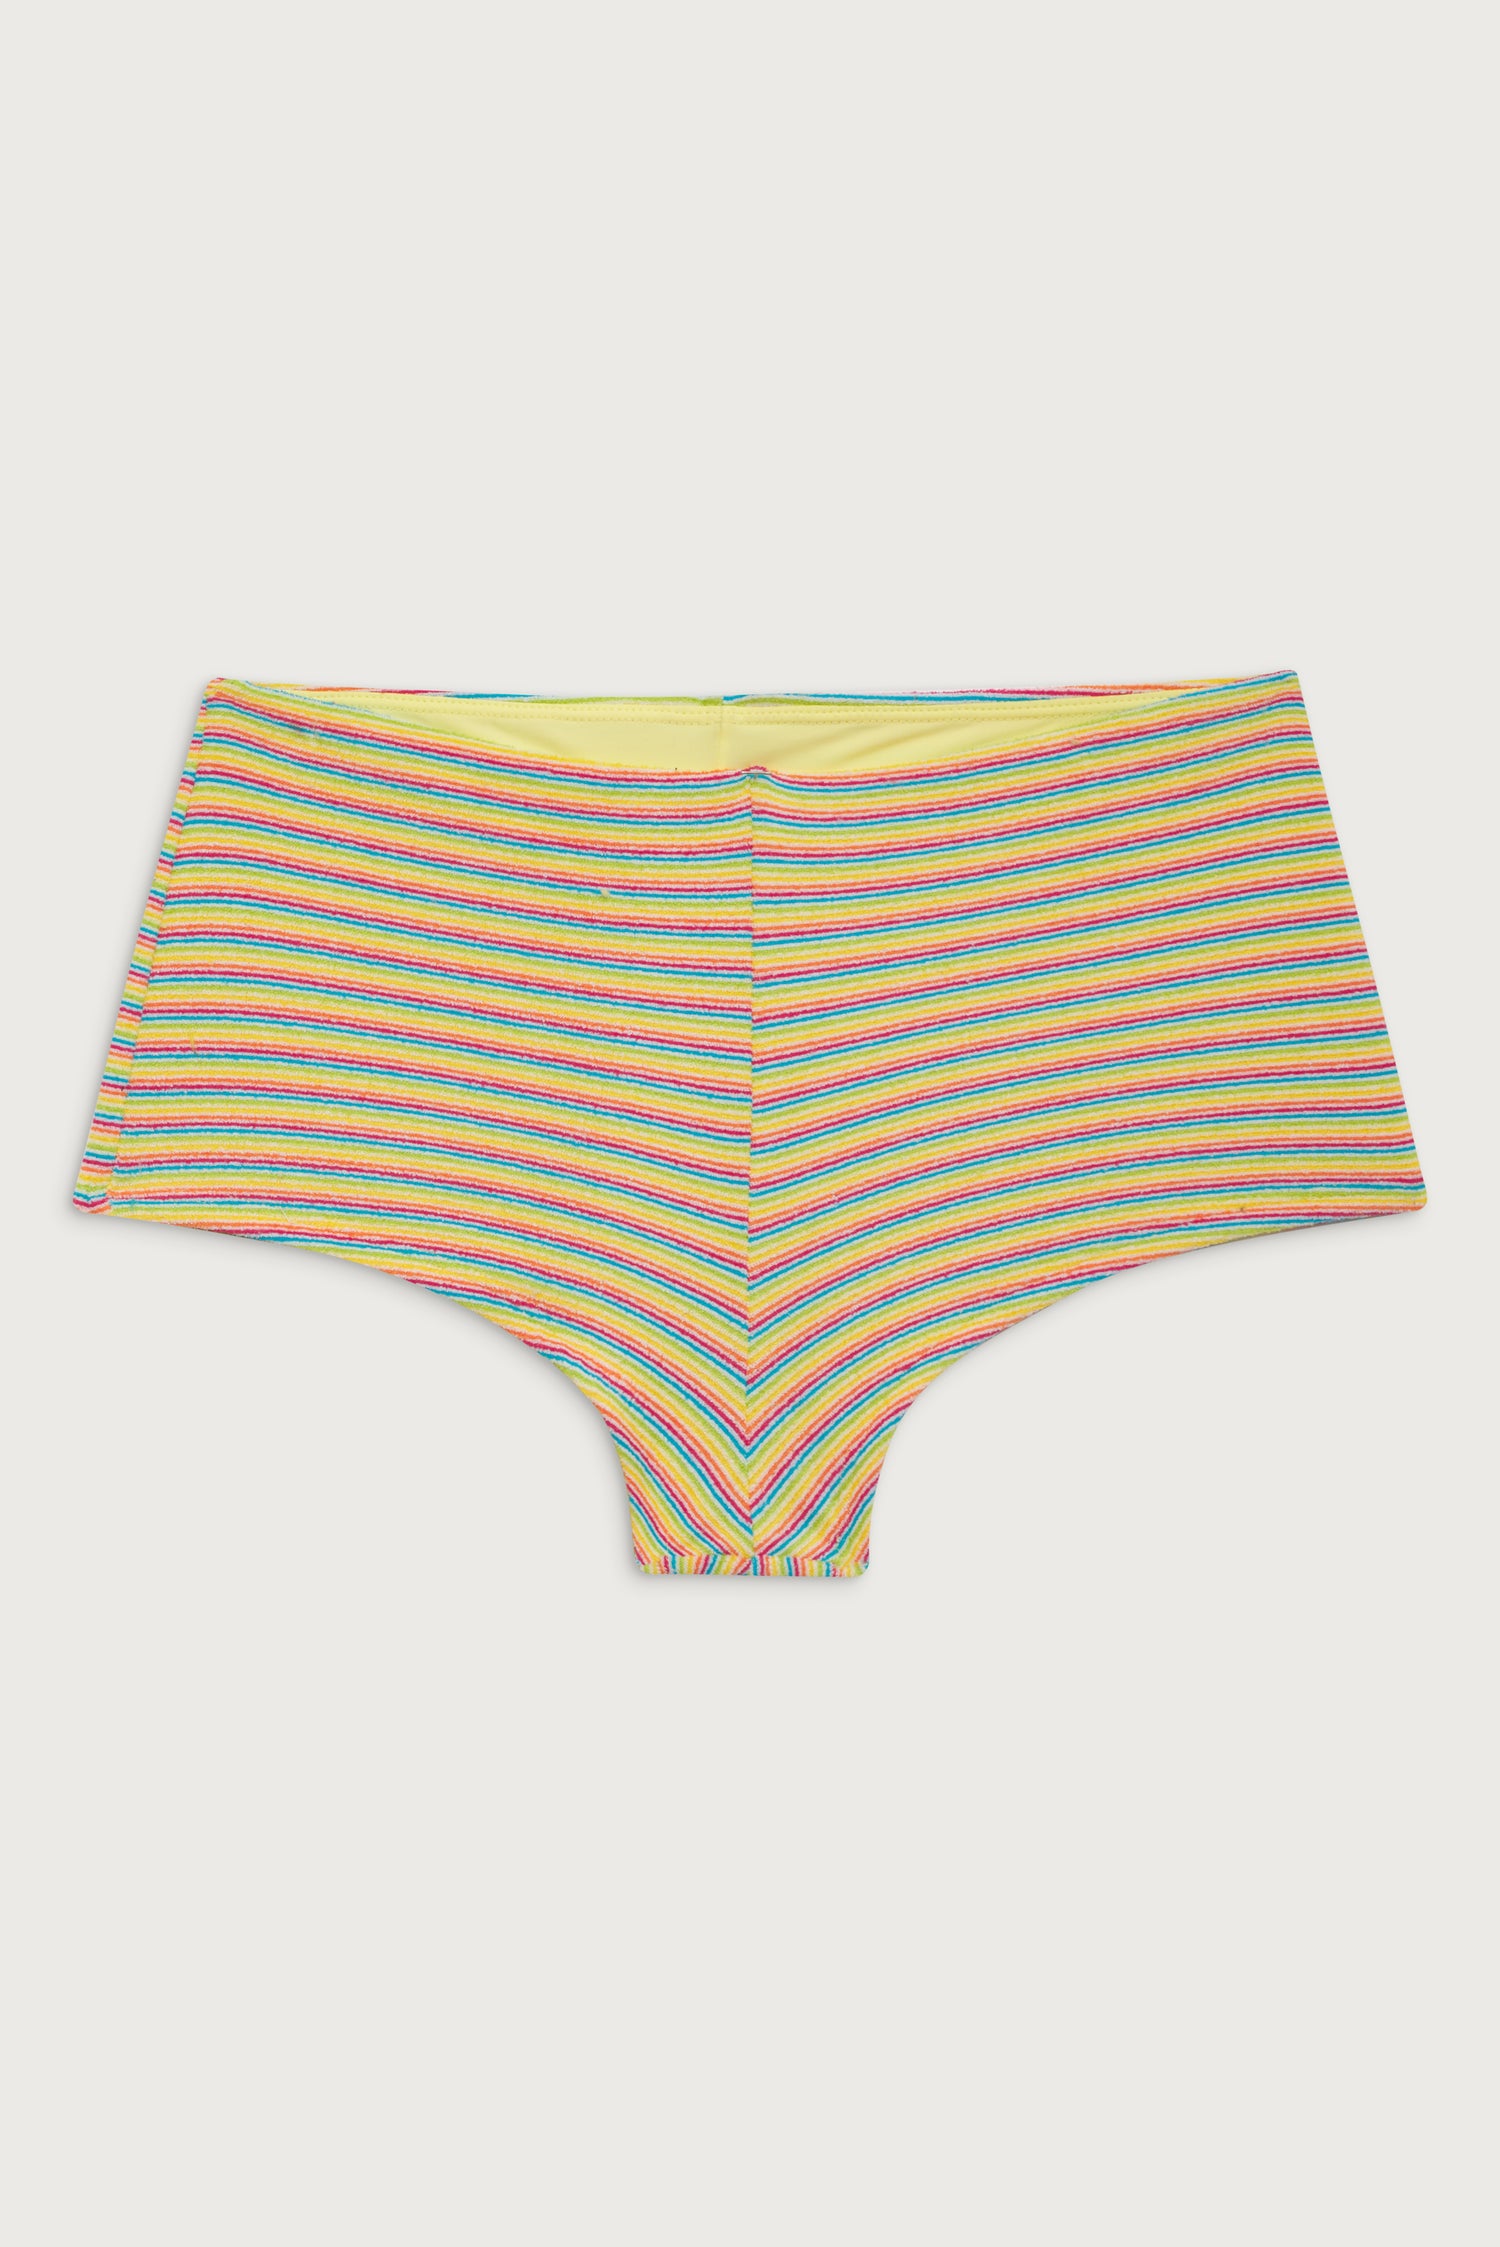 Genevieve Terry Boy Short Bikini Bottom - Lovers Stripe